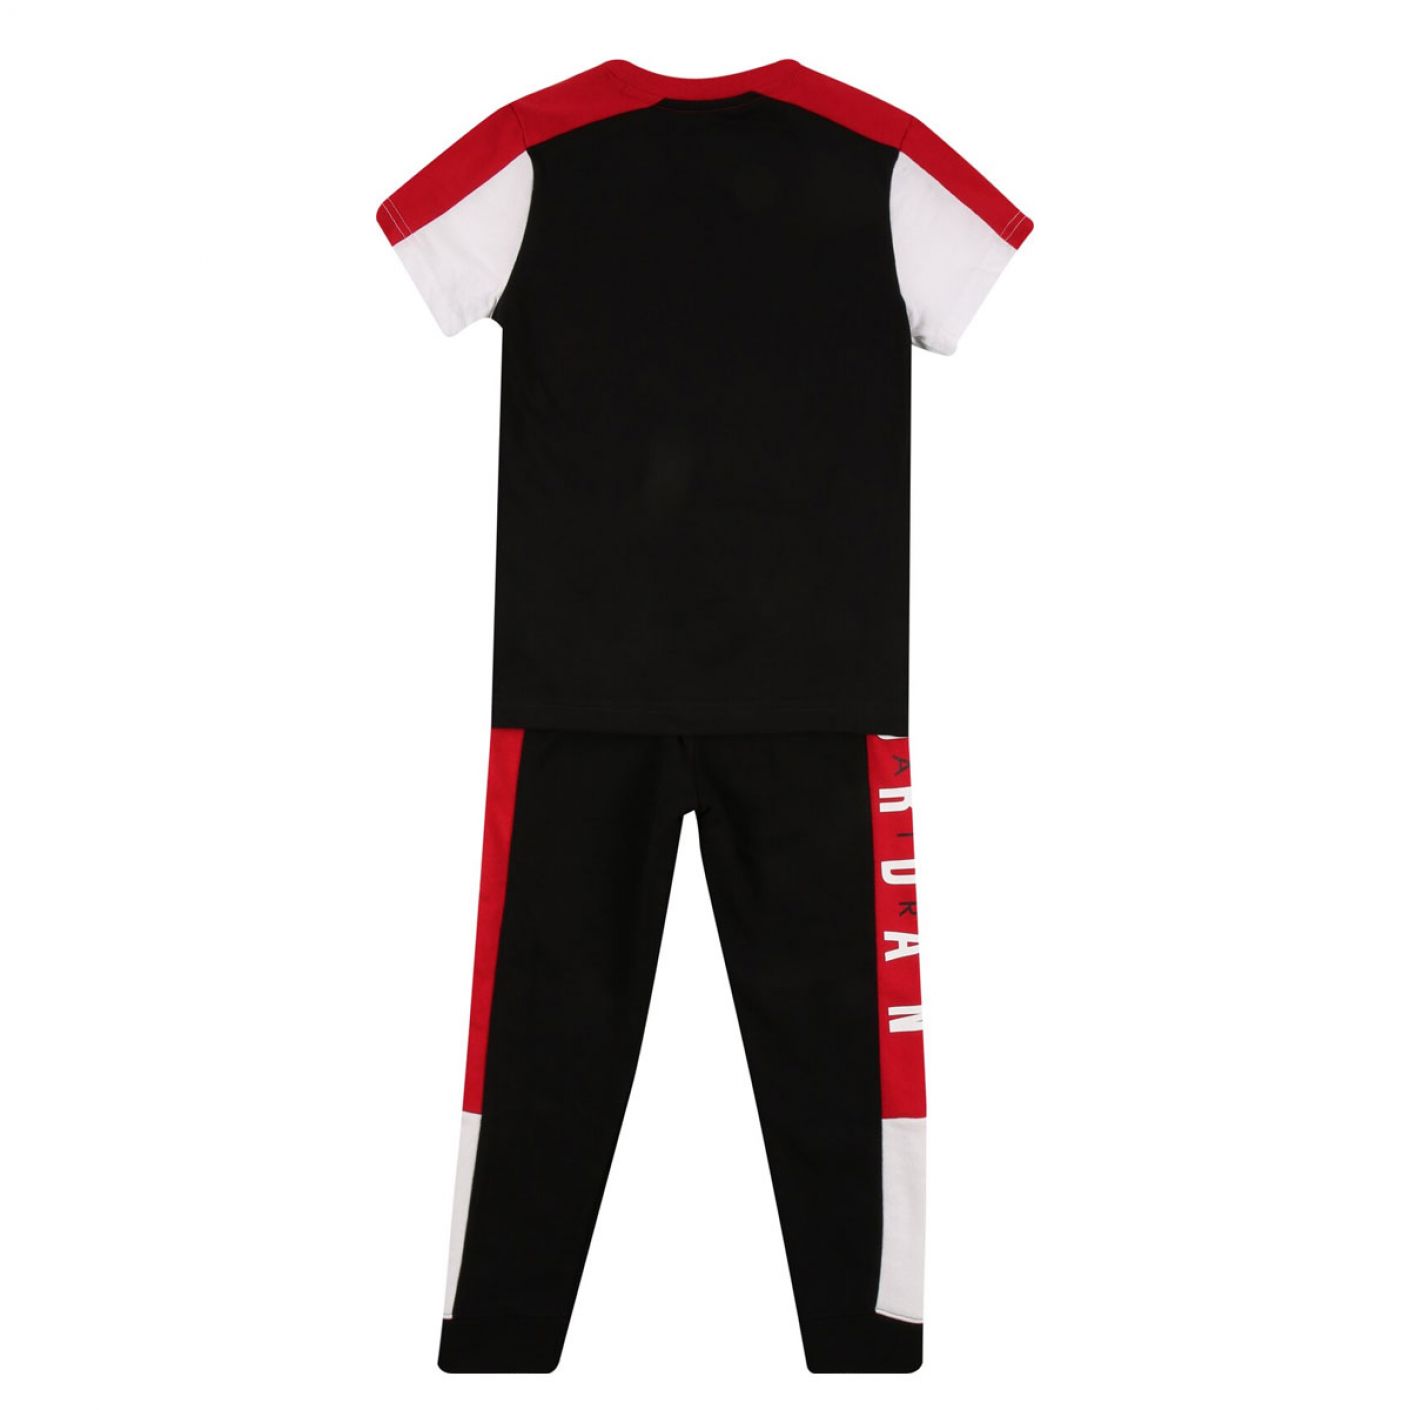 Nike Set Completo Jordan Ait Transitional Nero Rosso da Bambino